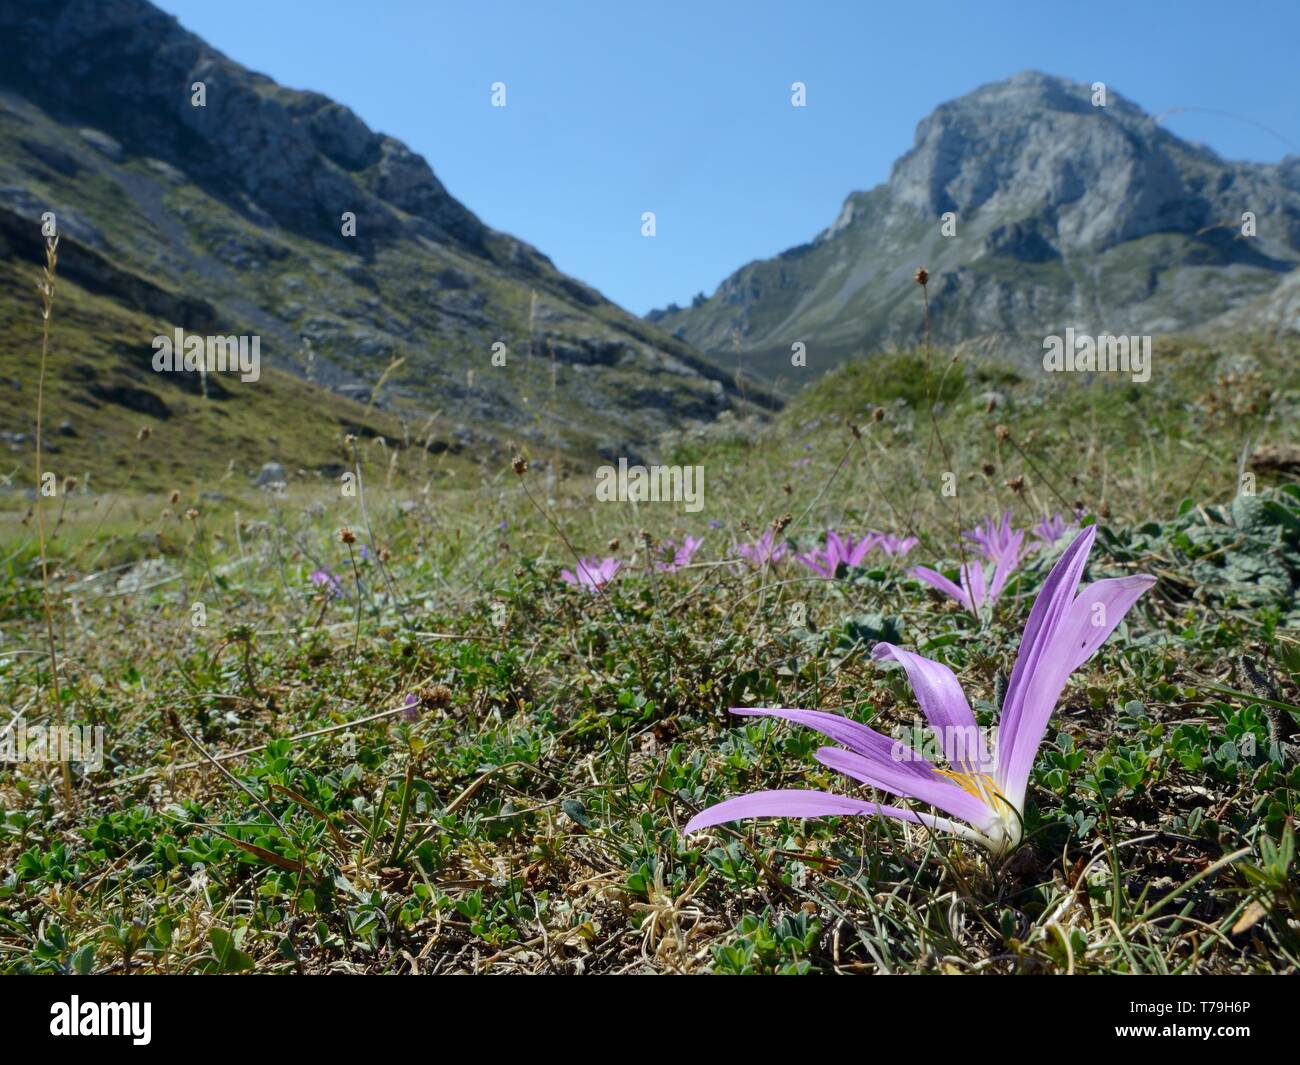 Pyrenean merendera / False meadow saffron (Merendera pyrenaica / Colchicum montanum) flowering on montane pastureland, Picos de Europa, Spain, August. Stock Photo